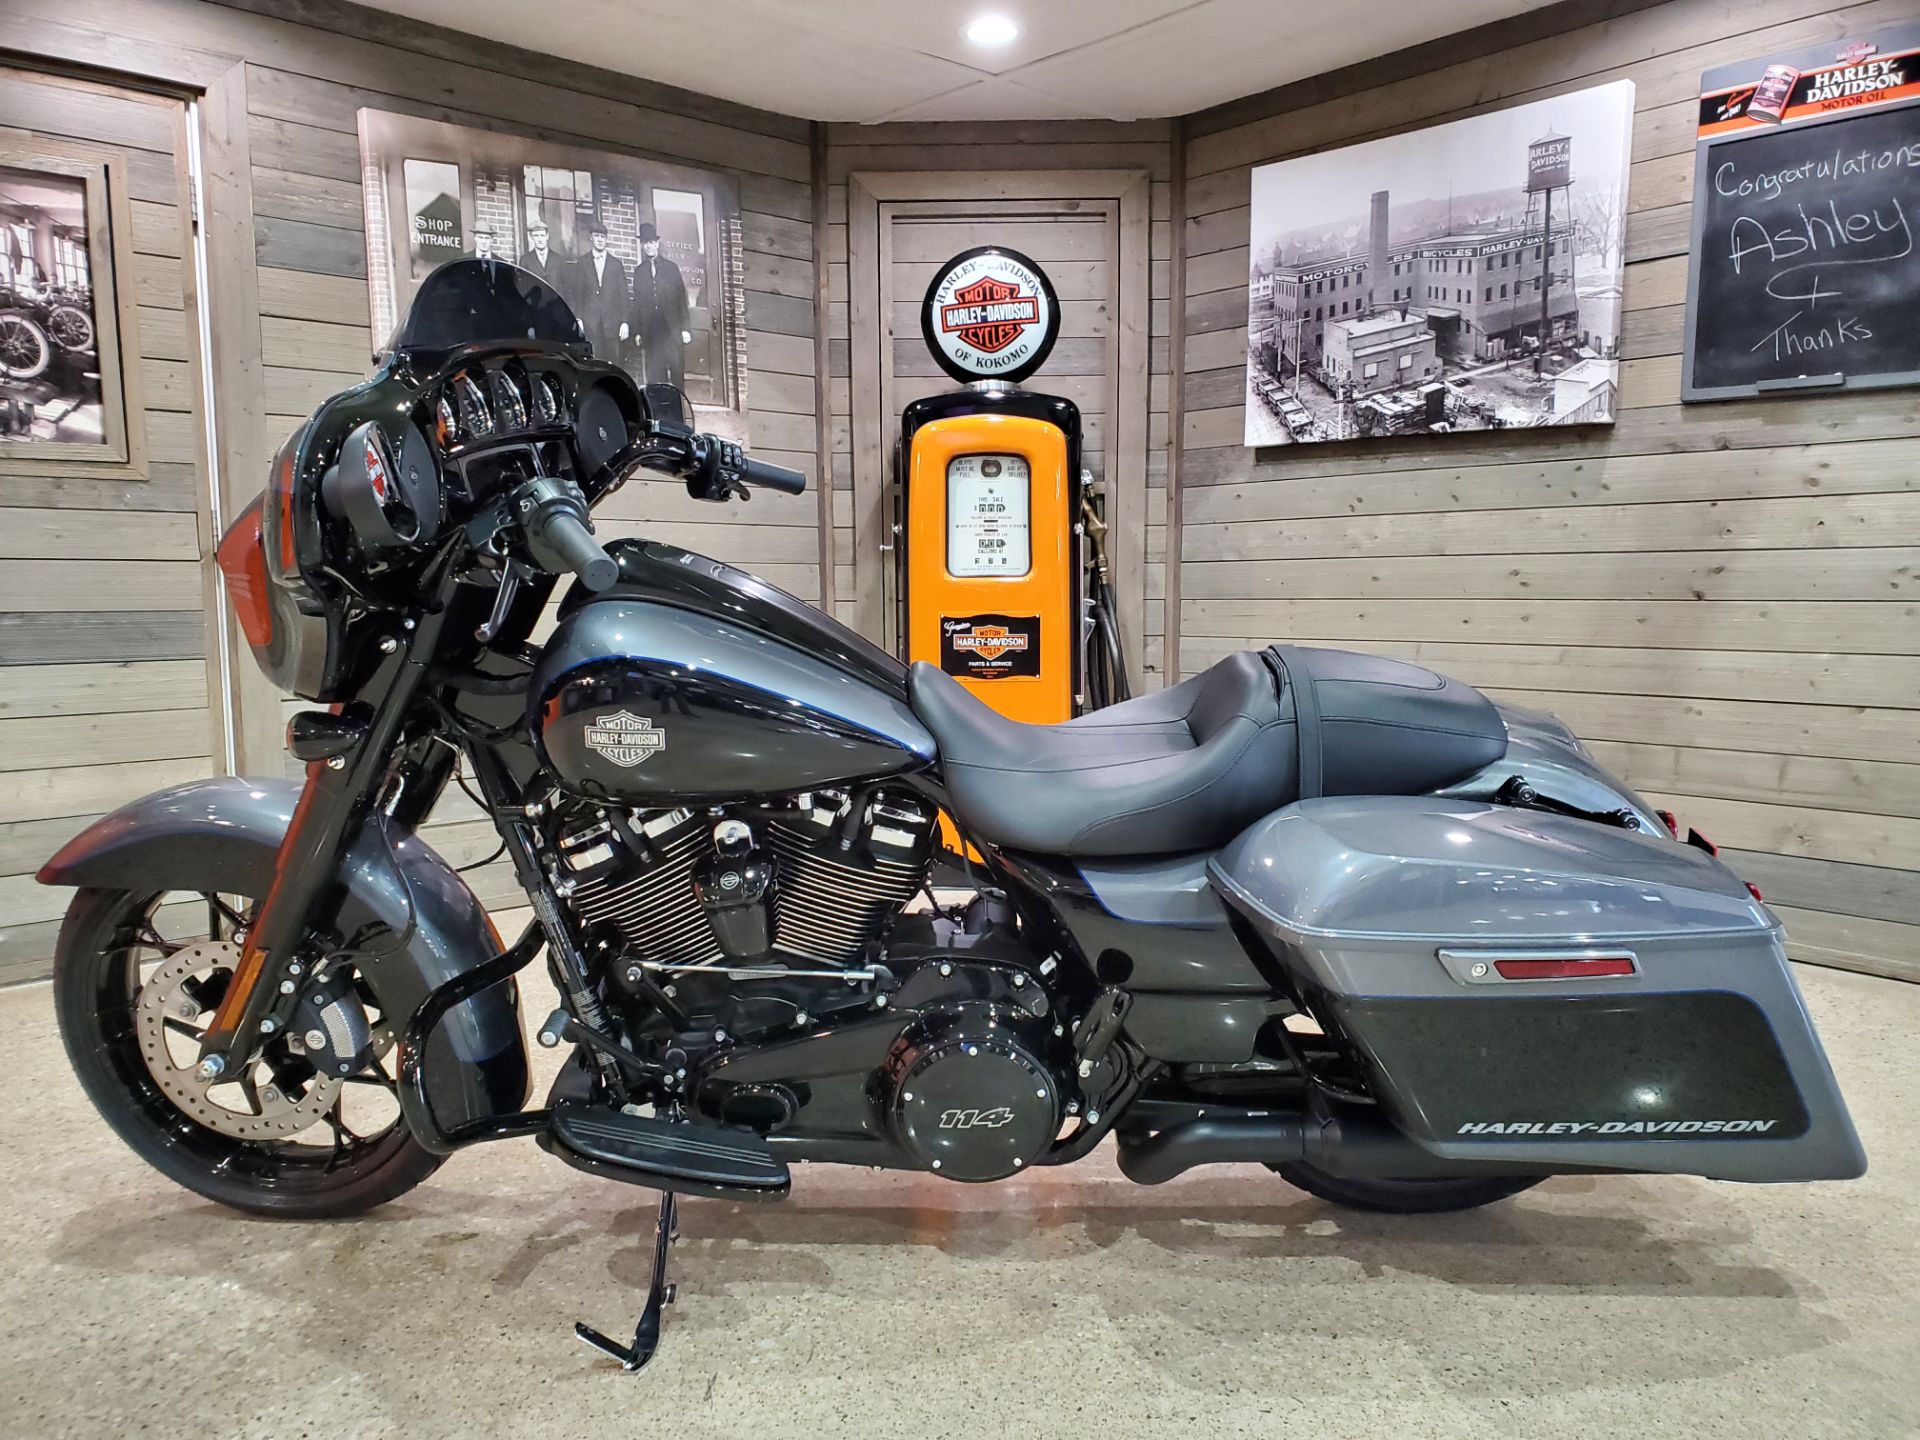 2021 Harley-Davidson Street Glide® Special in Kokomo, Indiana - Photo 6